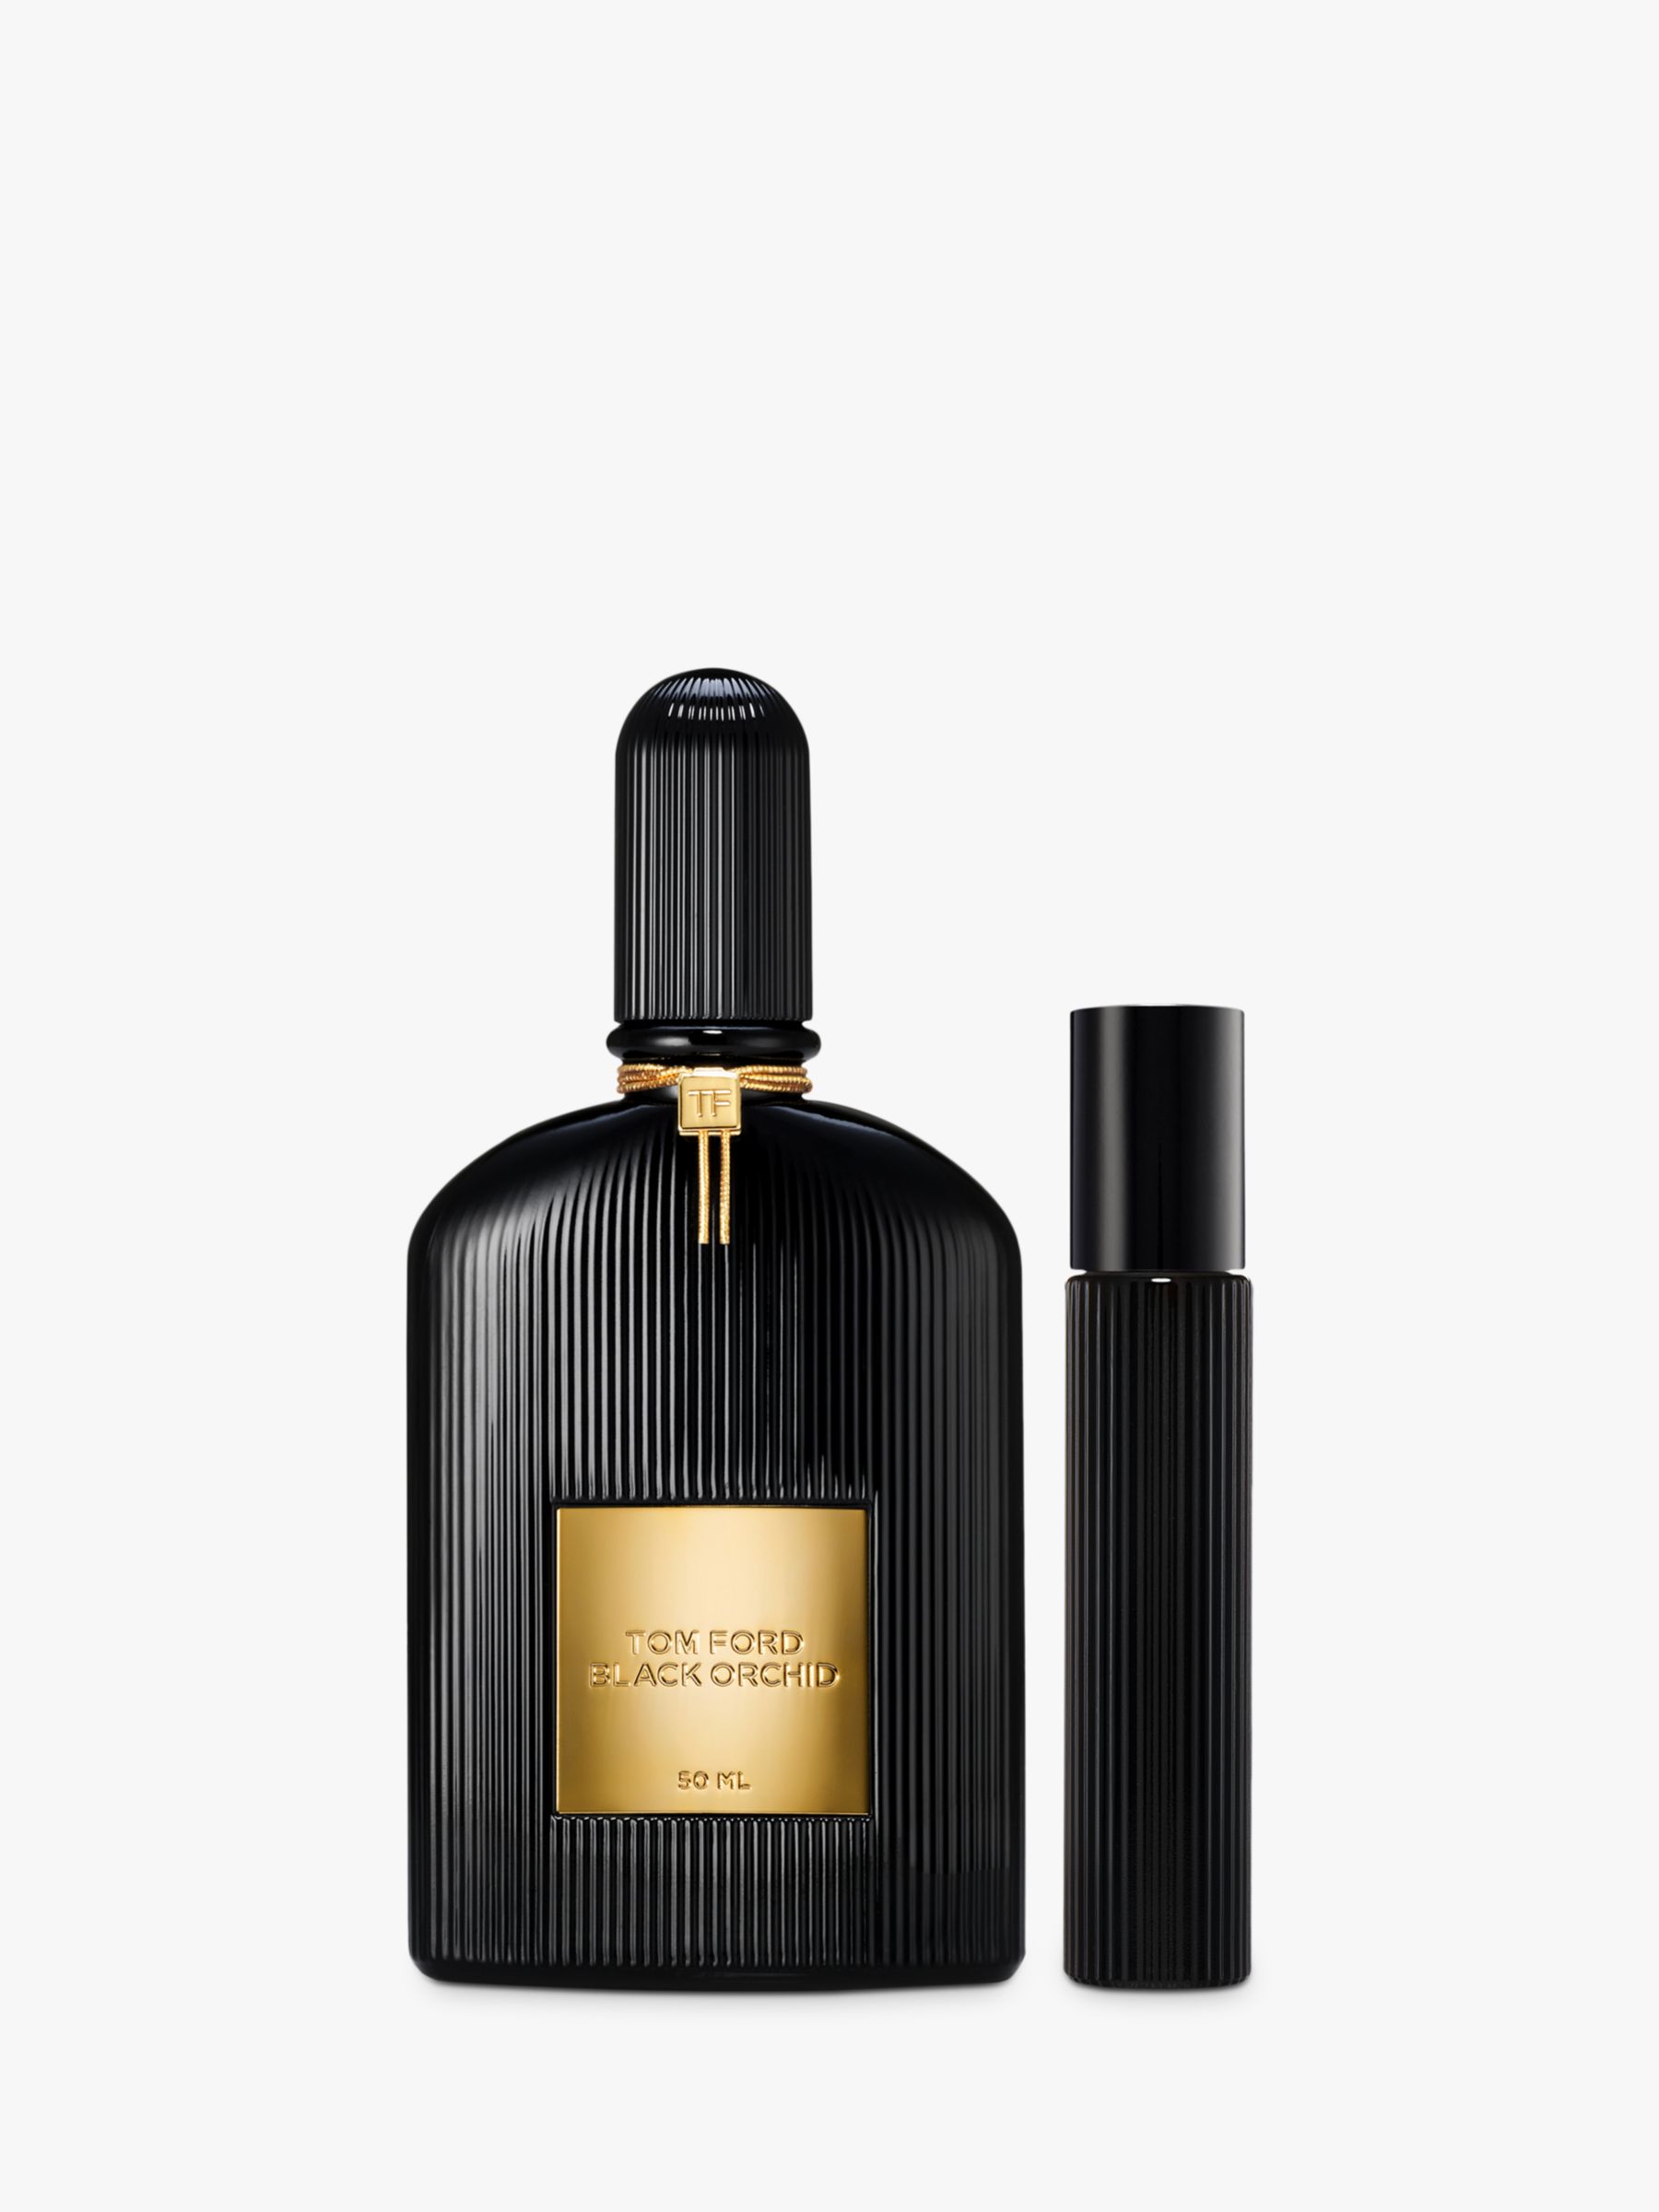 TOM FORD Black Orchid Eau de Parfum 50ml Fragrance Gift Set